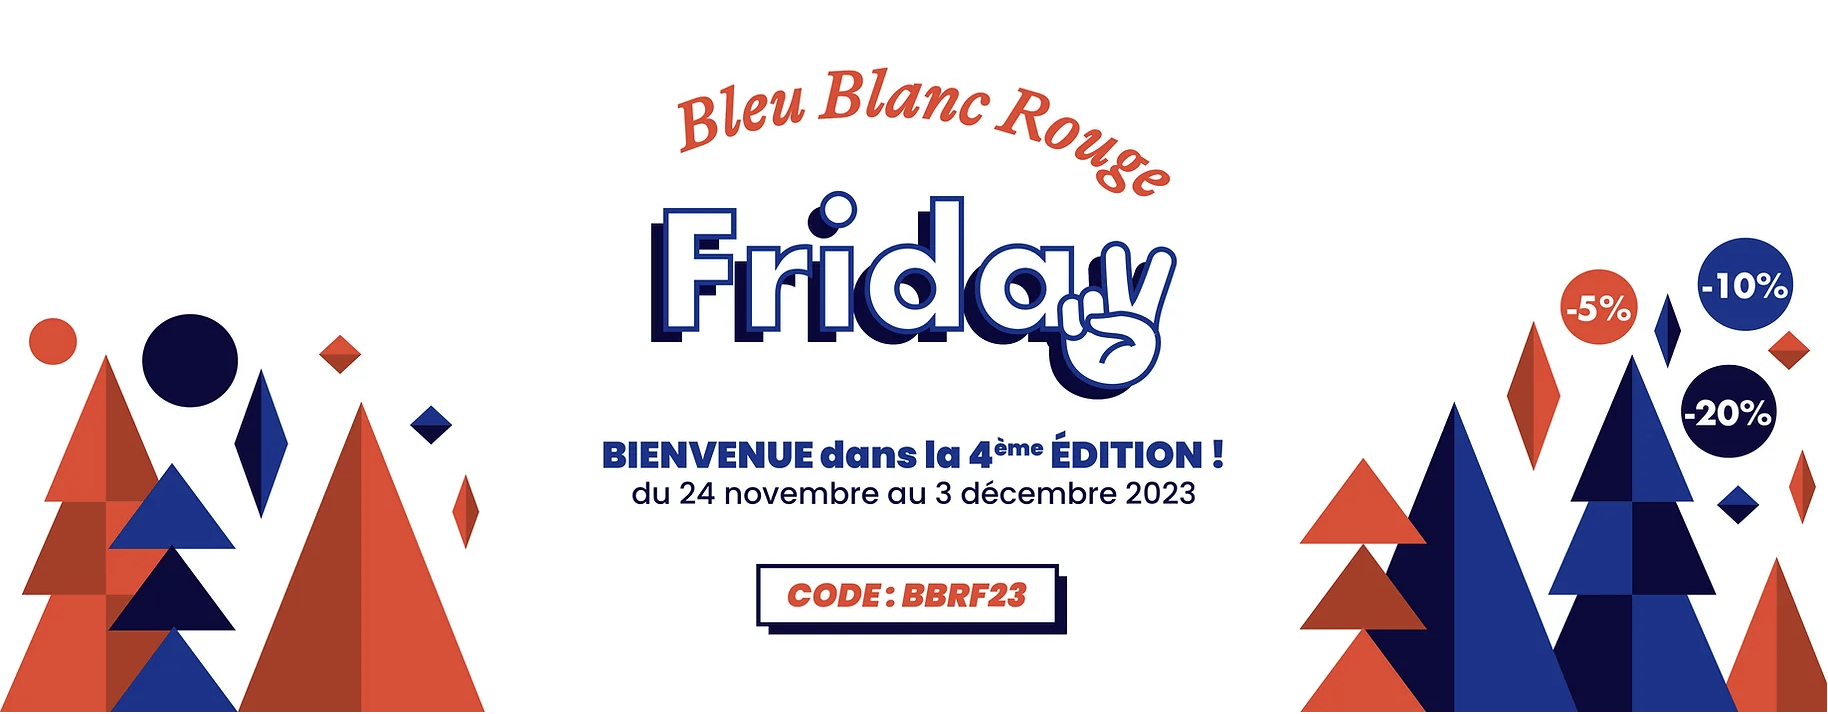 Bleu Blanc Rouge Friday by Gobi - Crédit photo : DR.